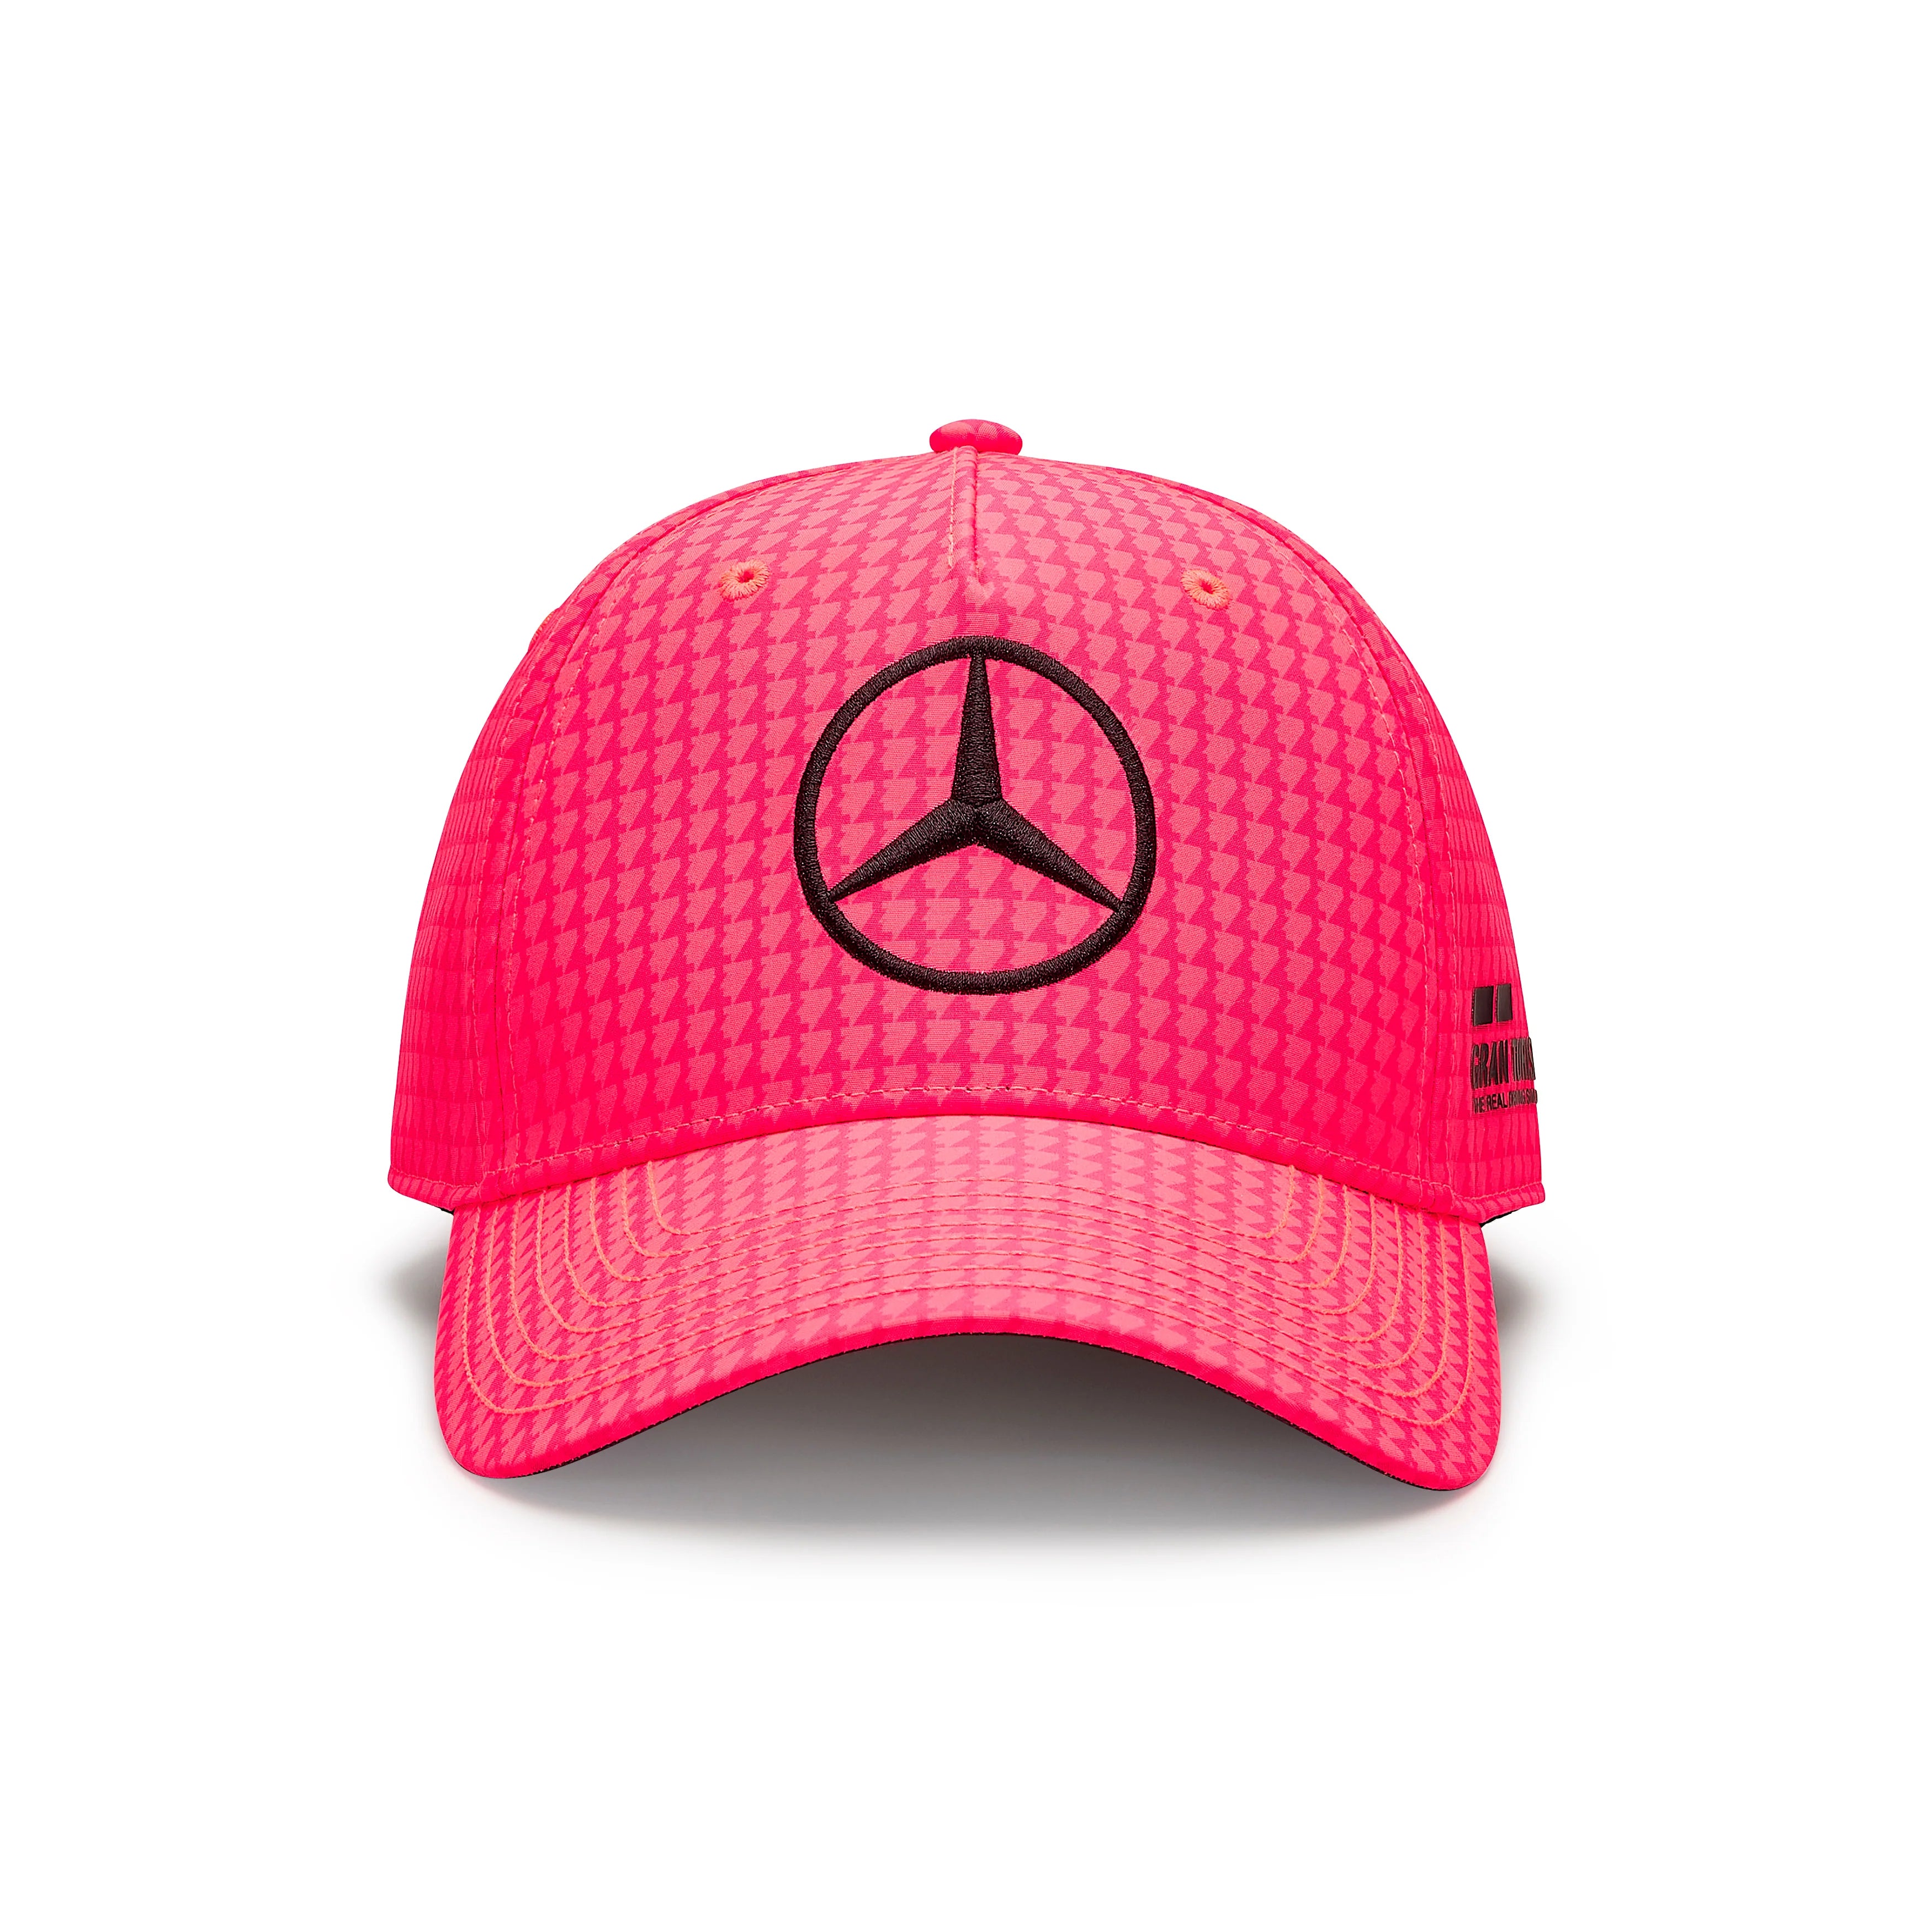 Mercedes AMG Petronas F1 Special Edition Lewis Hamilton Miami USA GP Hat Pink